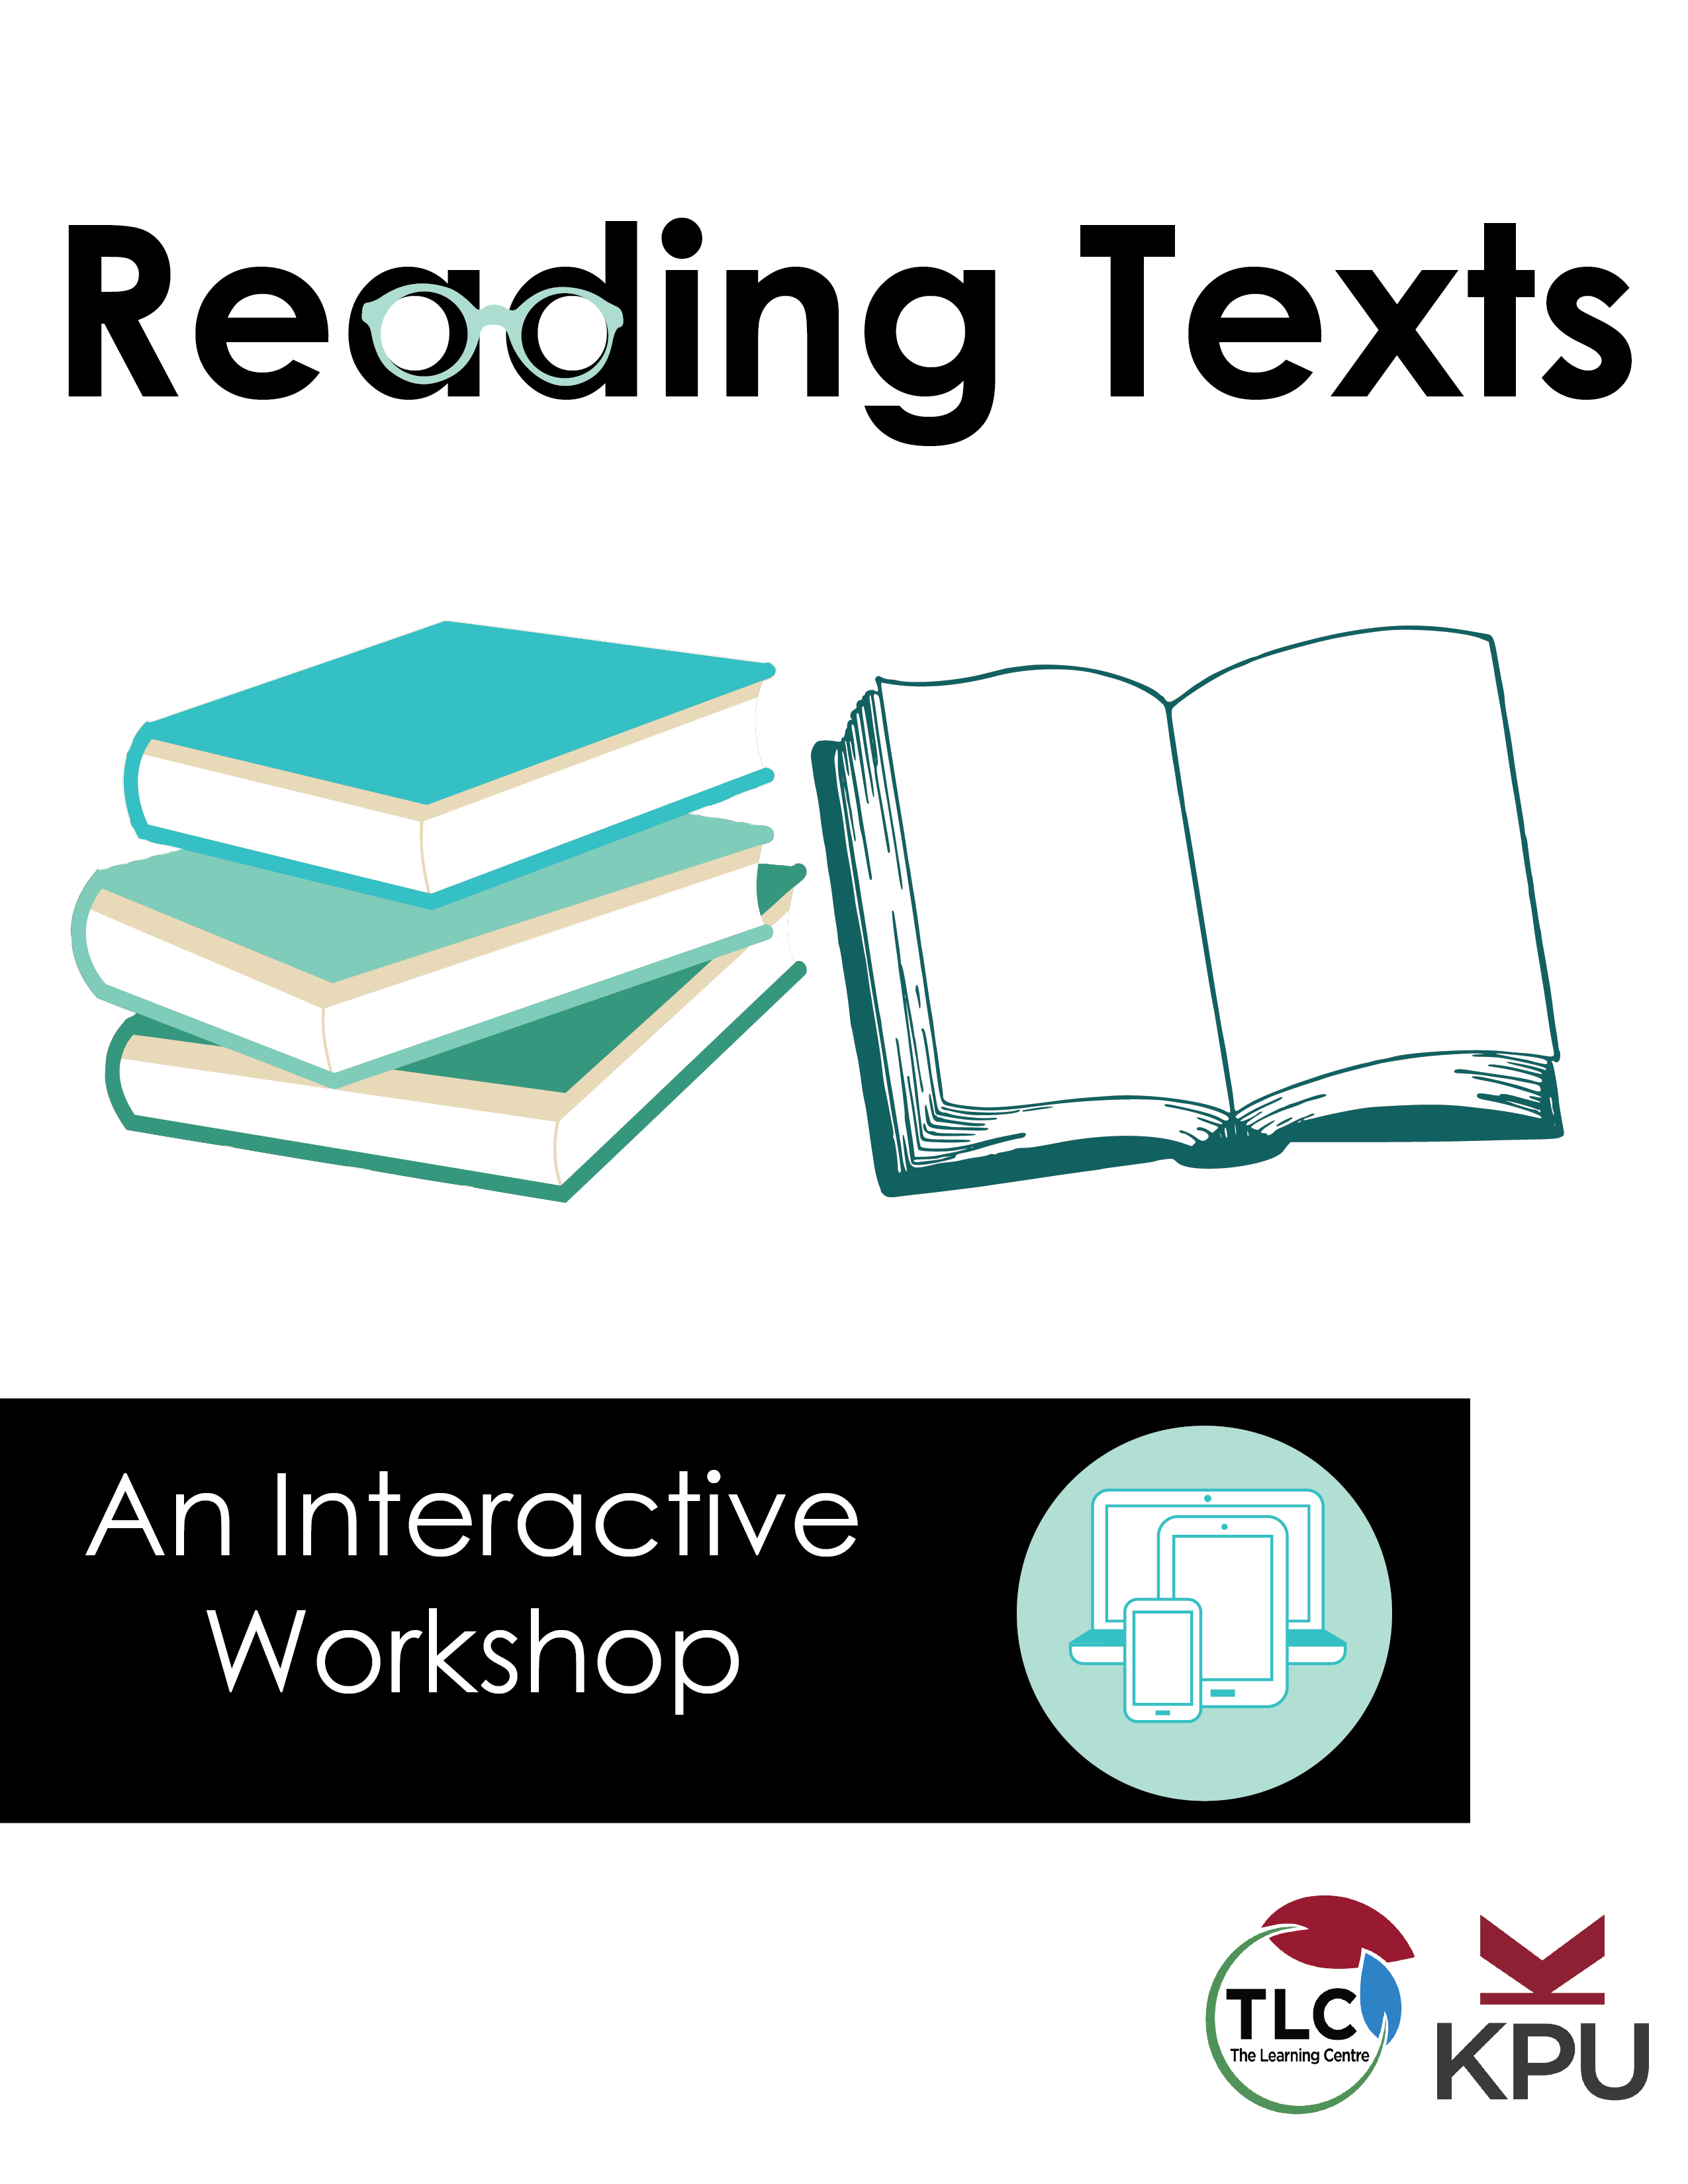 Reading Texts: An Online Workshop